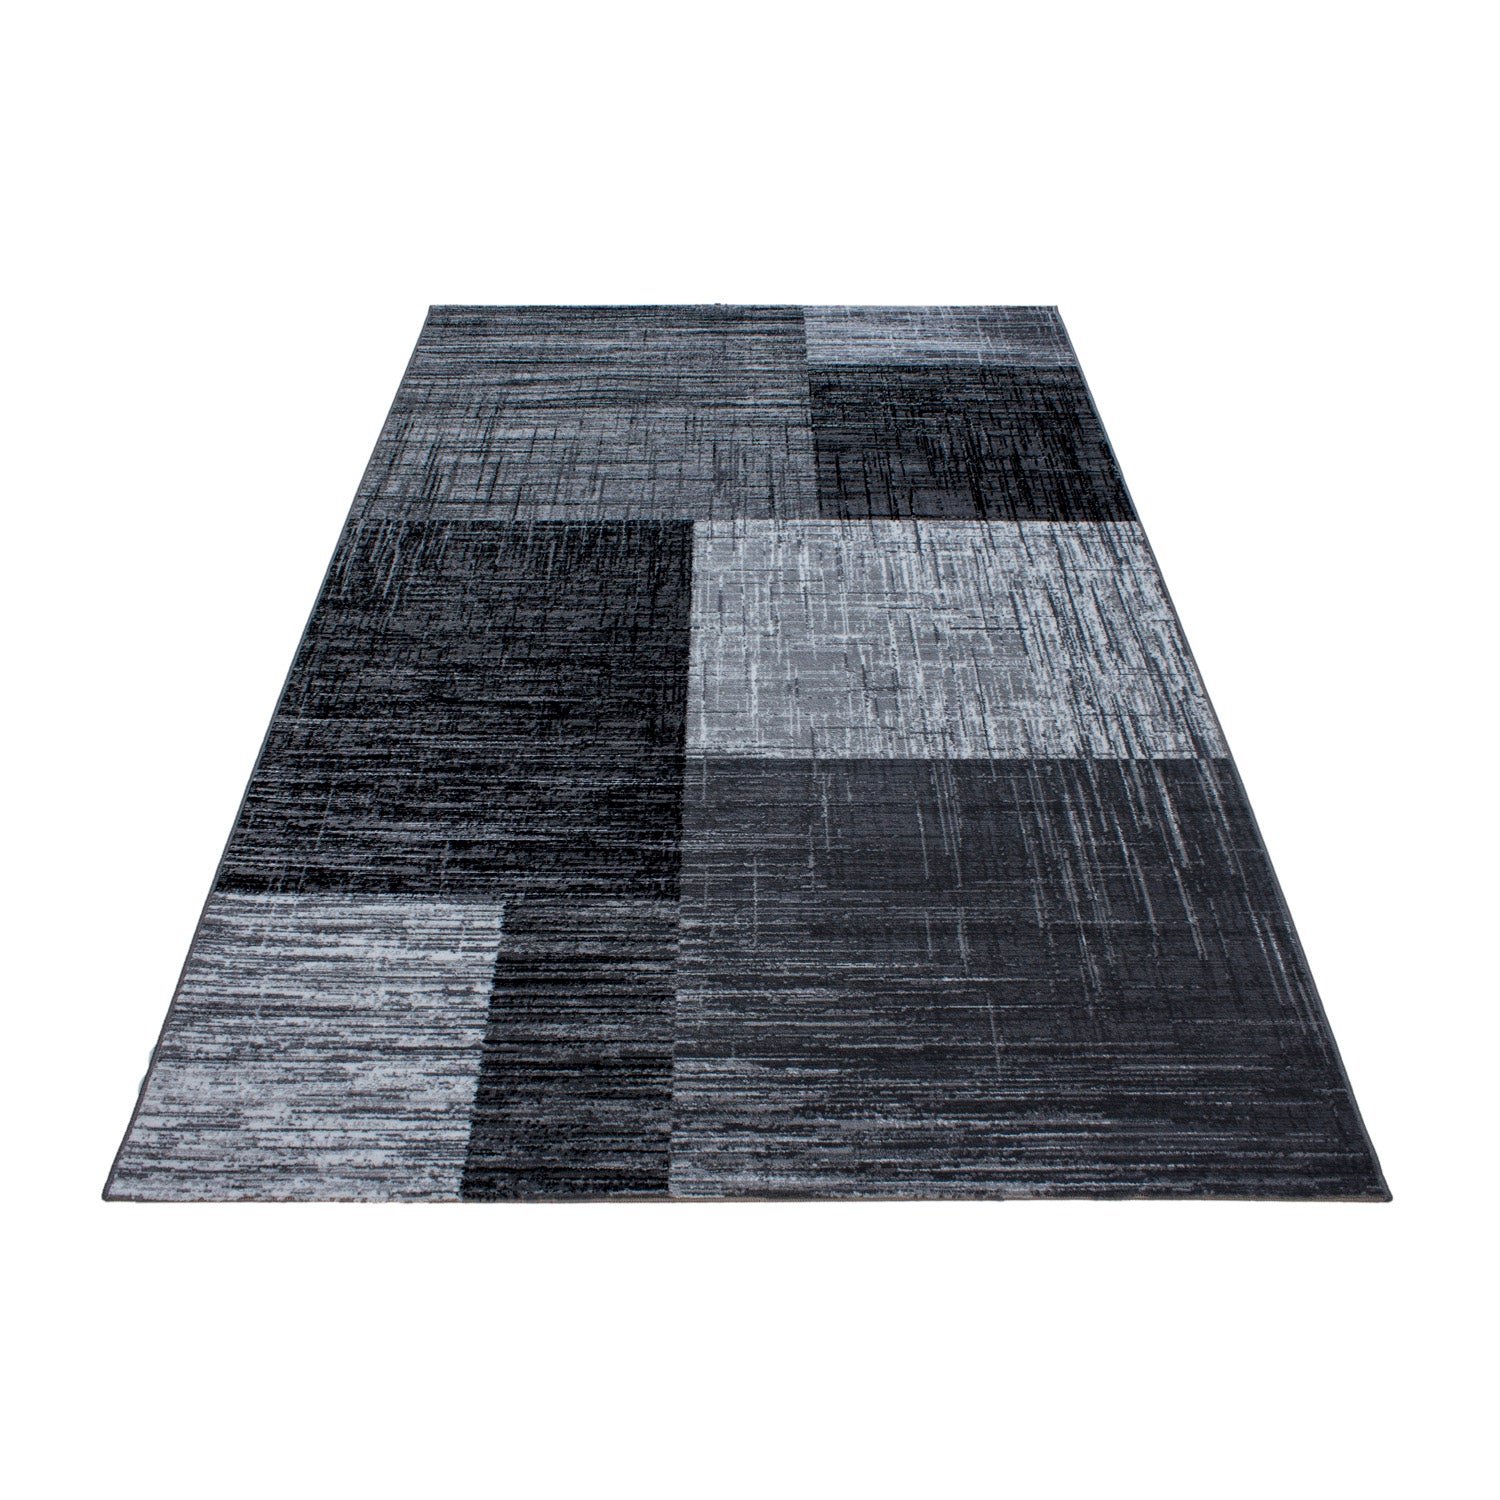 Kurzflor Design Teppich Modern geometrisches Muster Grau Schwarz Weiss Meliert